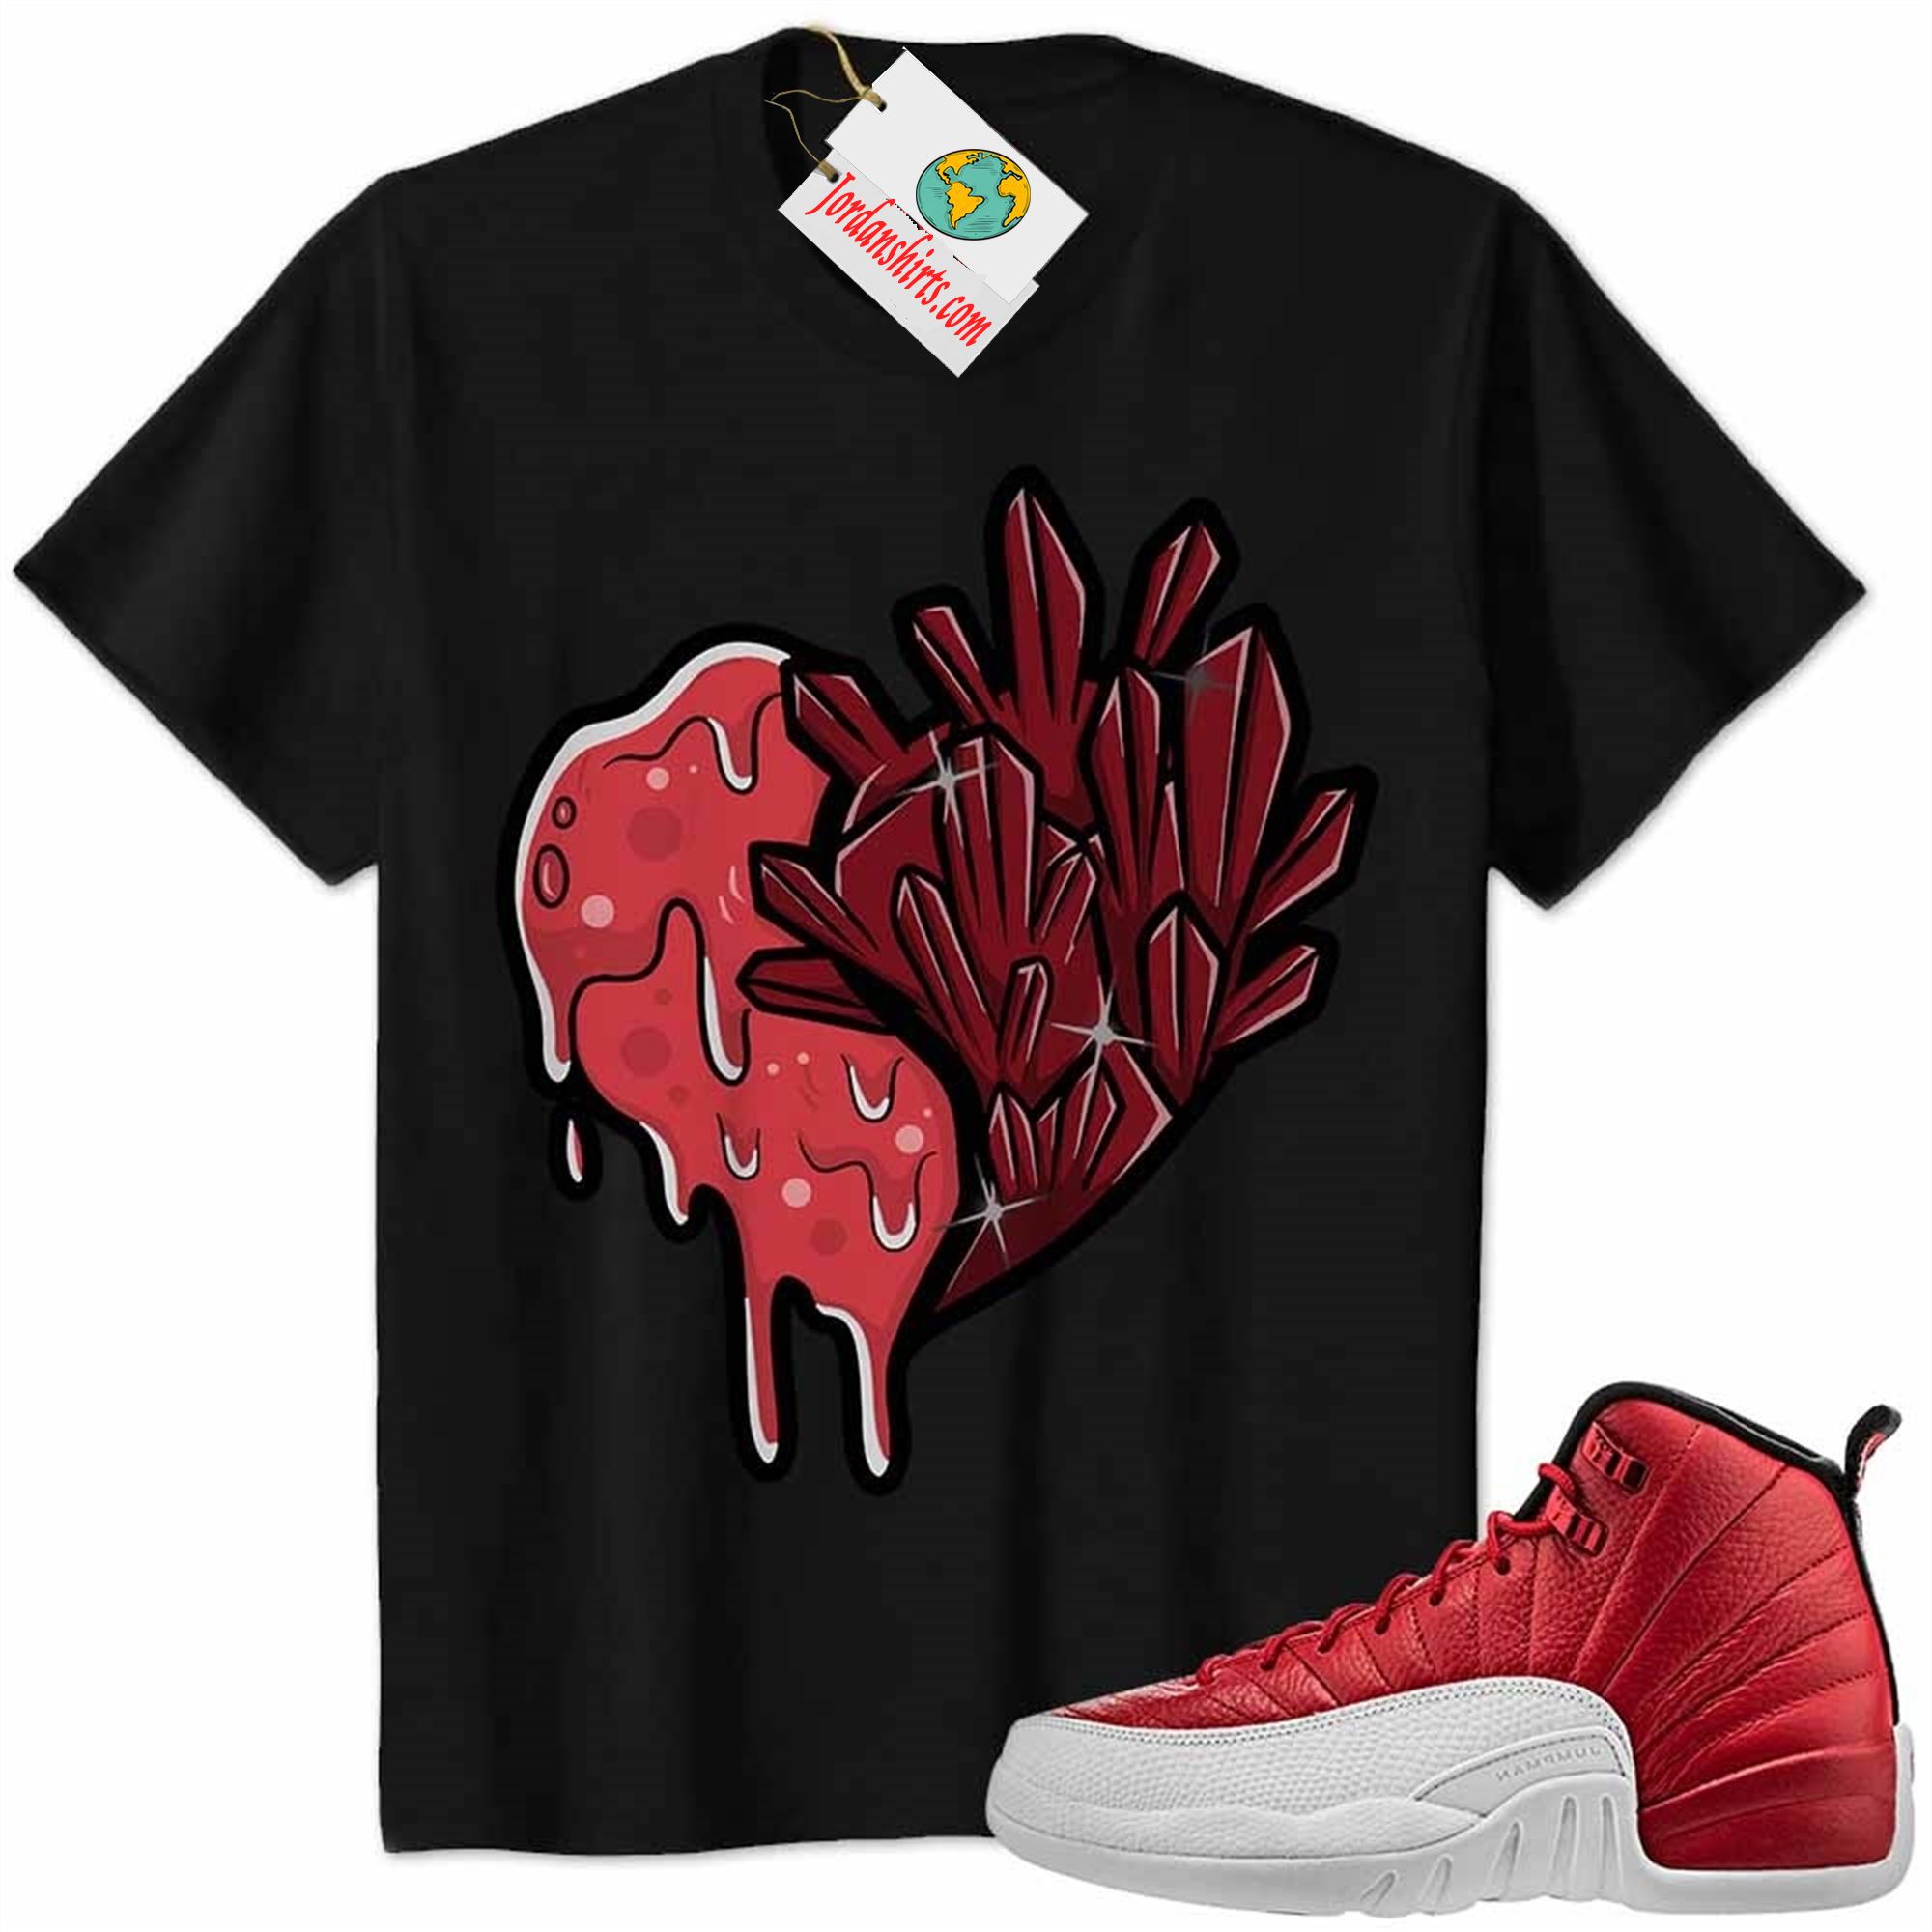 Jordan 12 Shirt, Crystal And Melt Heart Black Air Jordan 12 Gym Red 12s Plus Size Up To 5xl